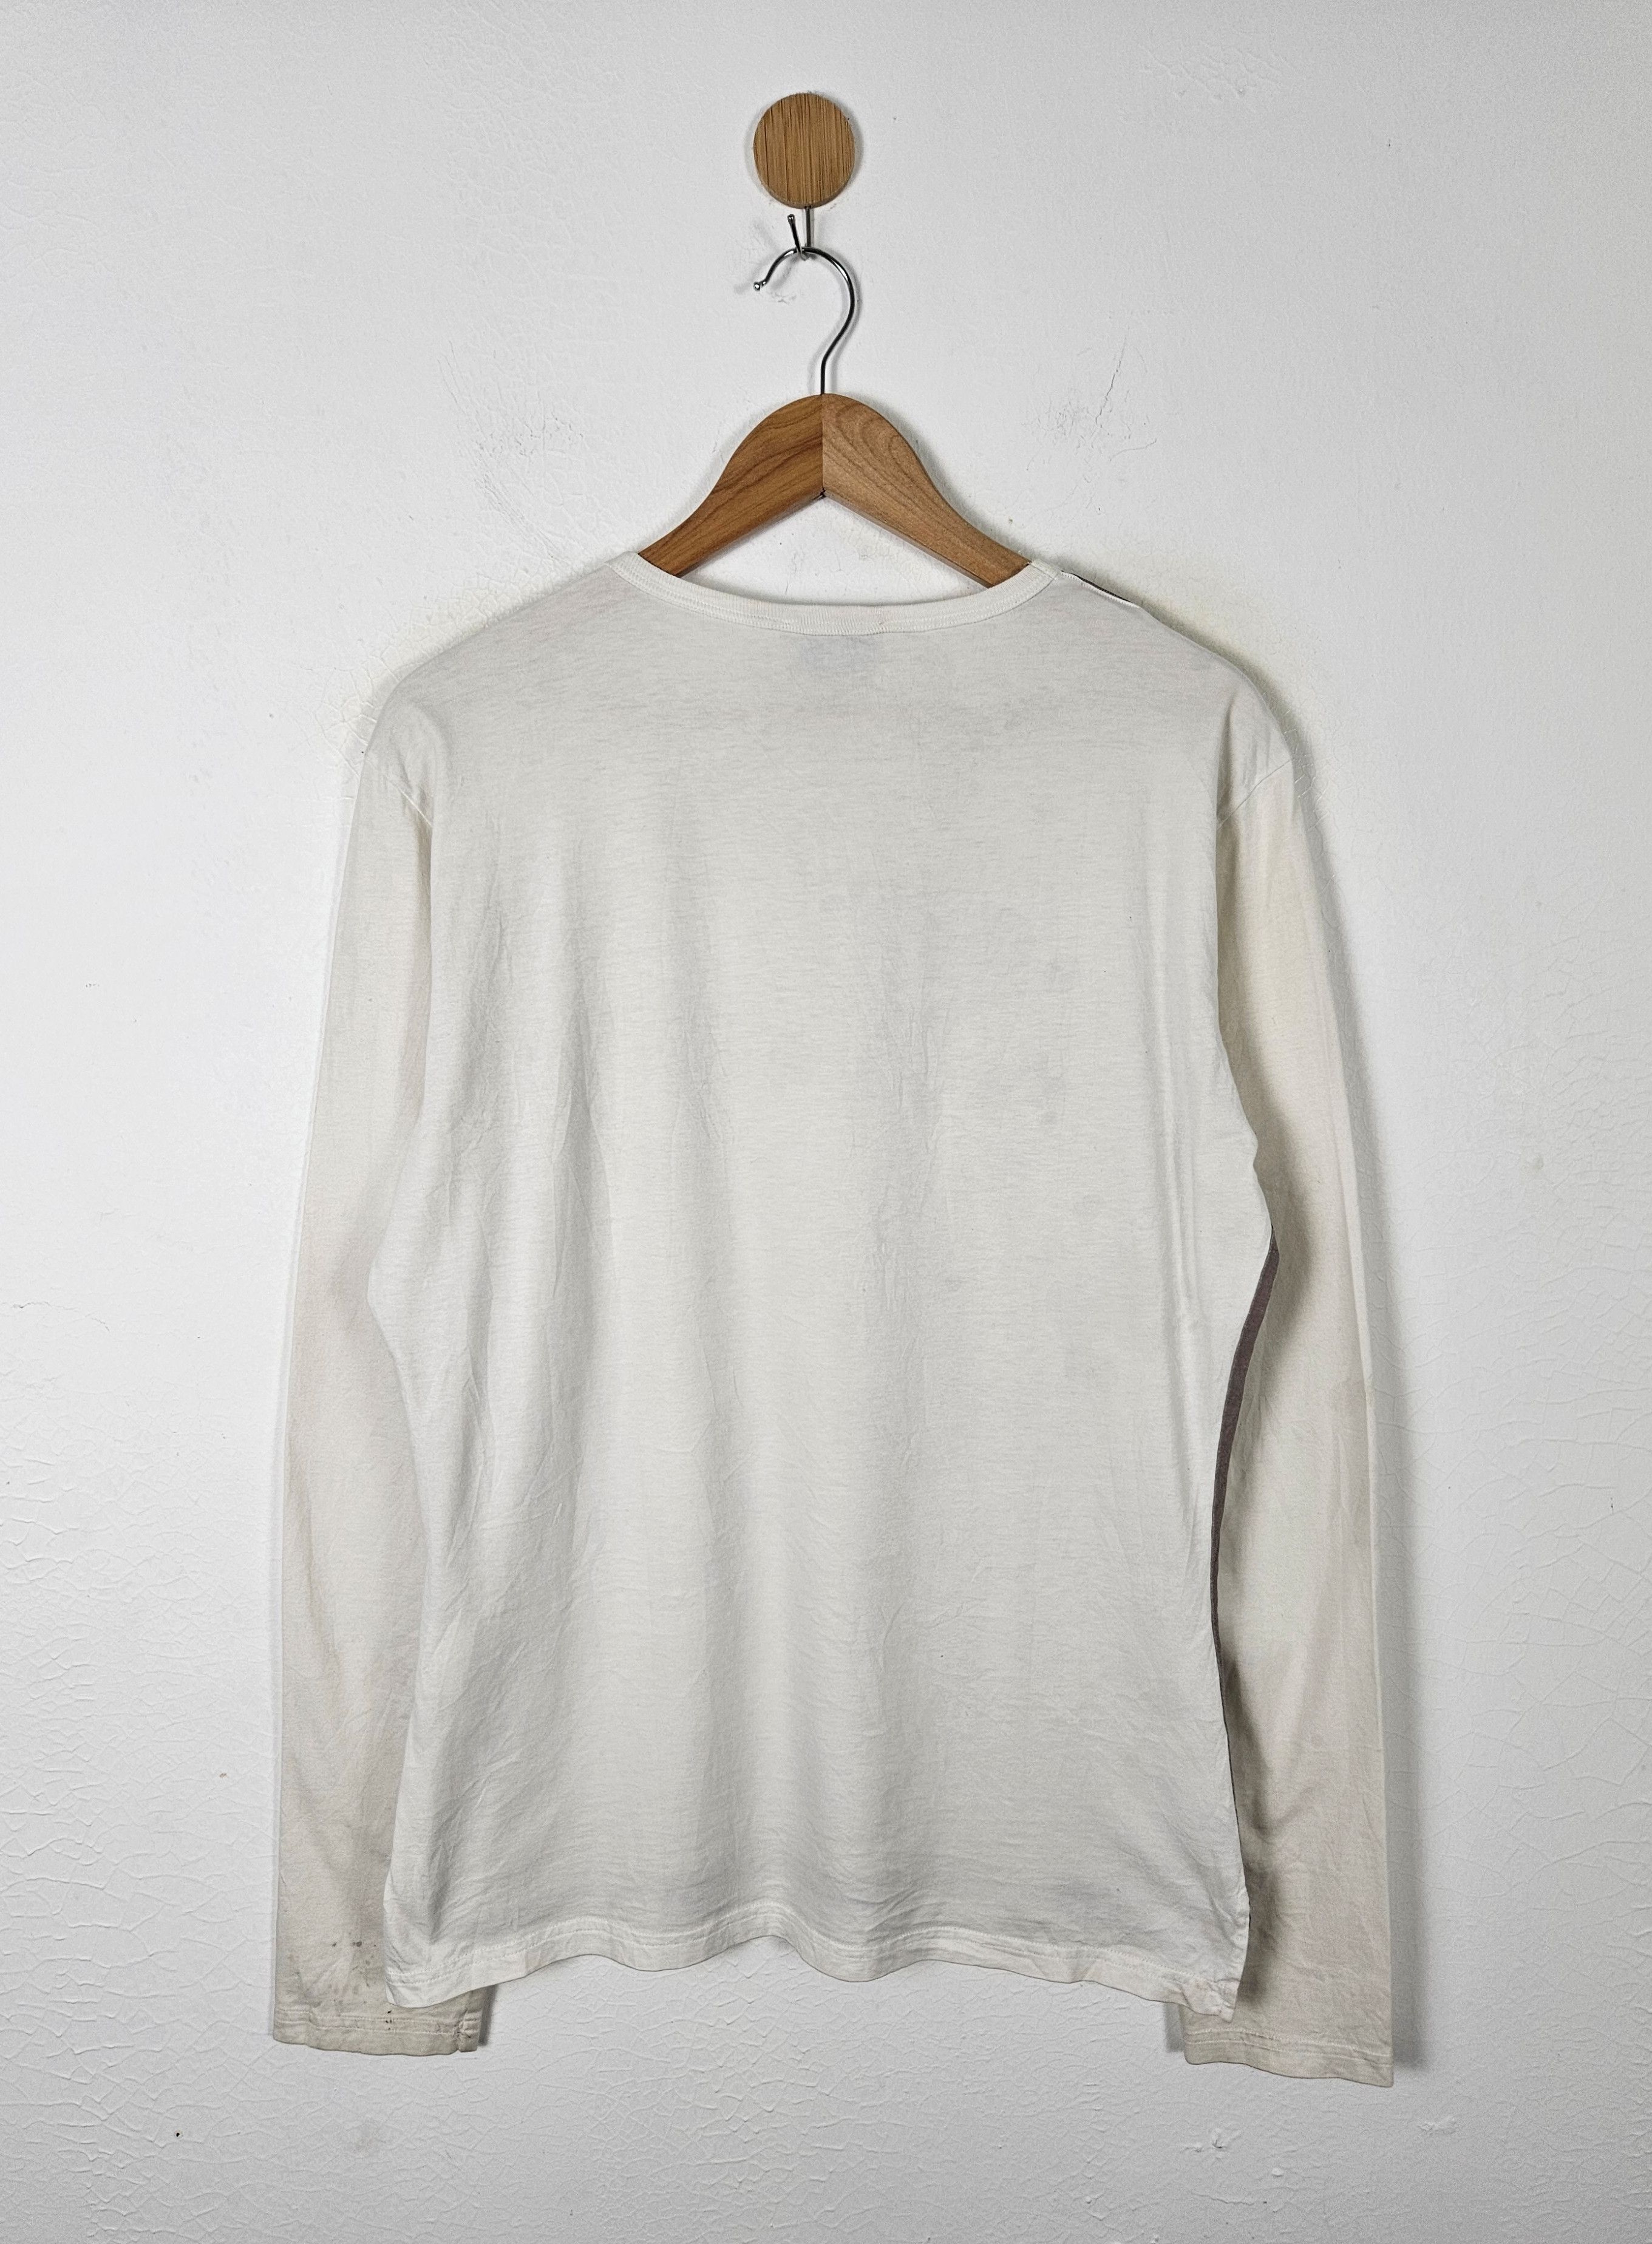 Vivienne Westwood Man Shirt - 3